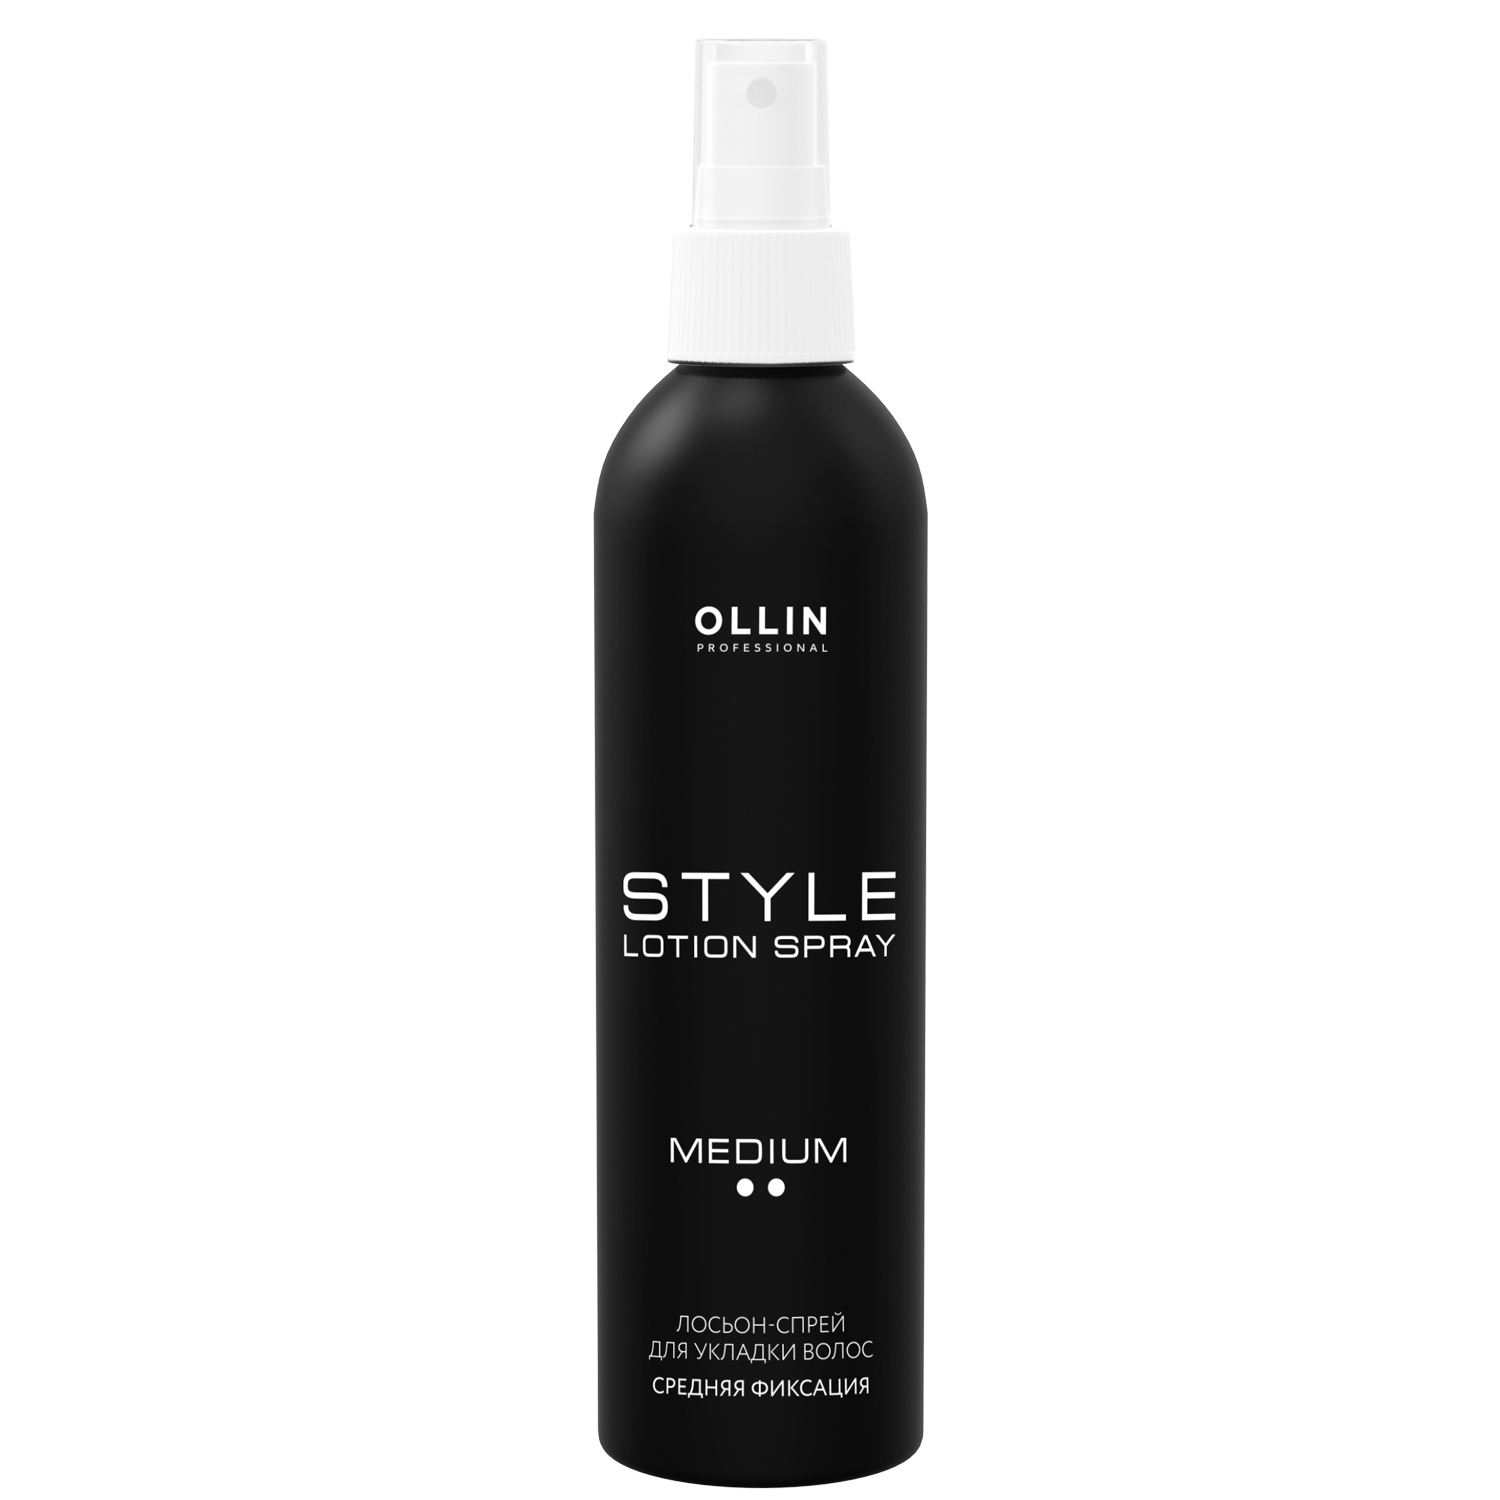 Ollin Professional Лосьон-спрей для укладки волос средней фиксации, 250 мл (Ollin Professional, Style) ollin спрей для укладки волос ollin professional style средней фиксации 250 мл